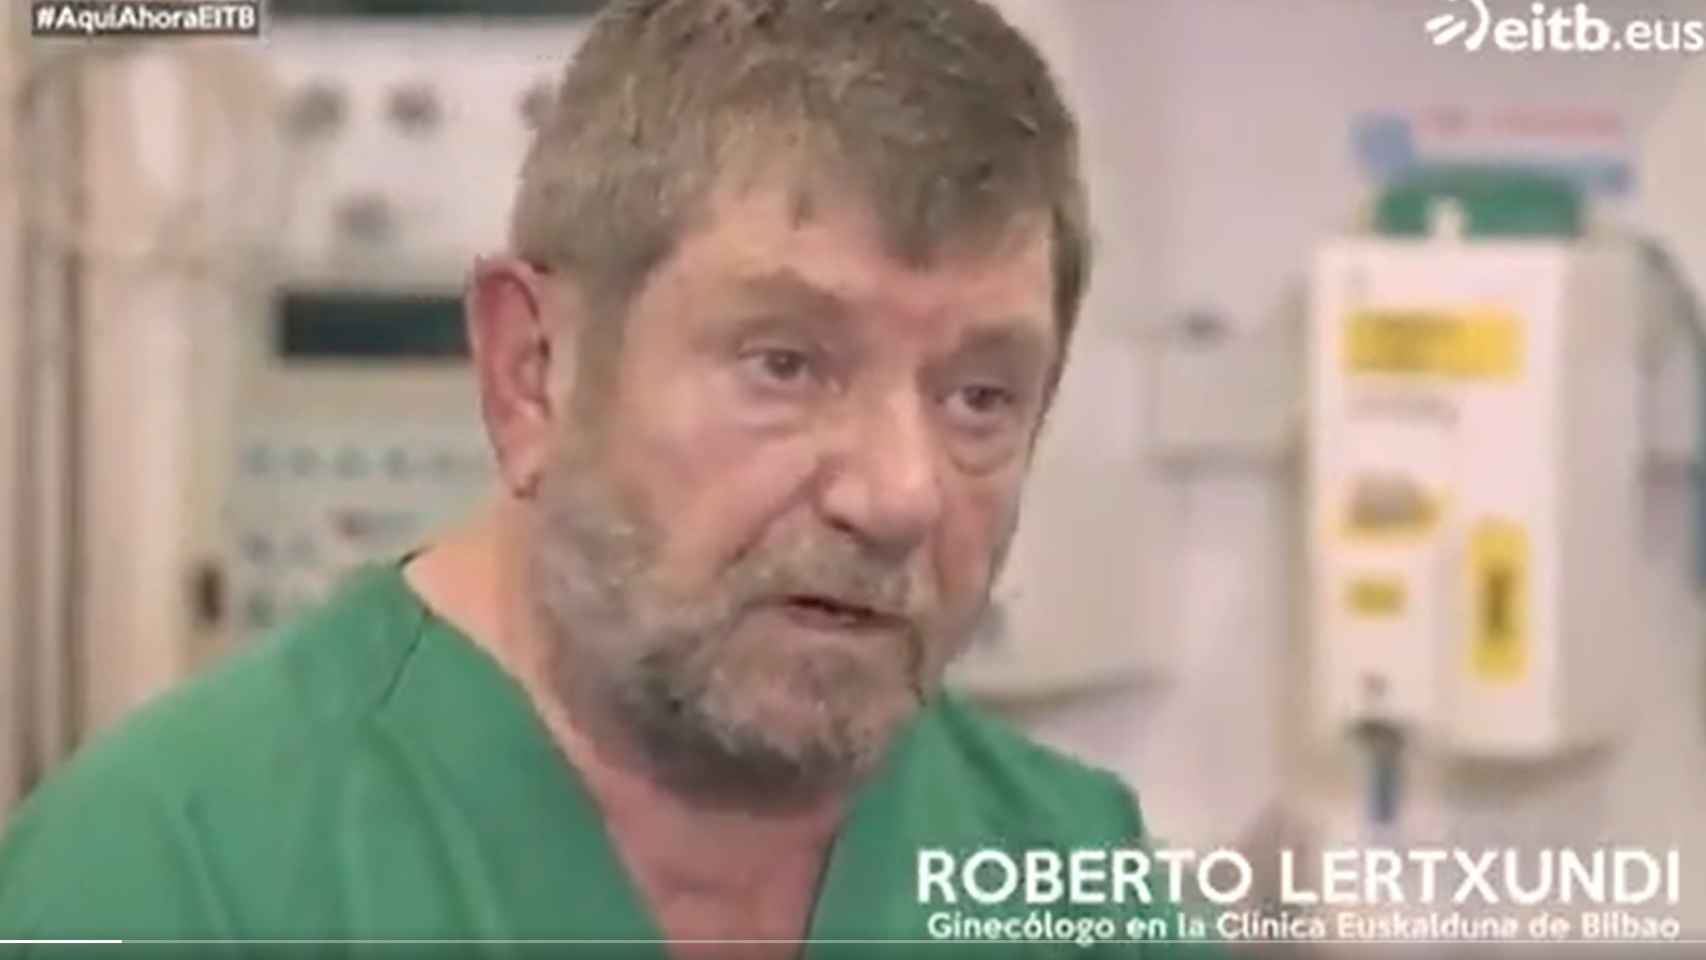 El ginecólogo Roberto Lertxundi.